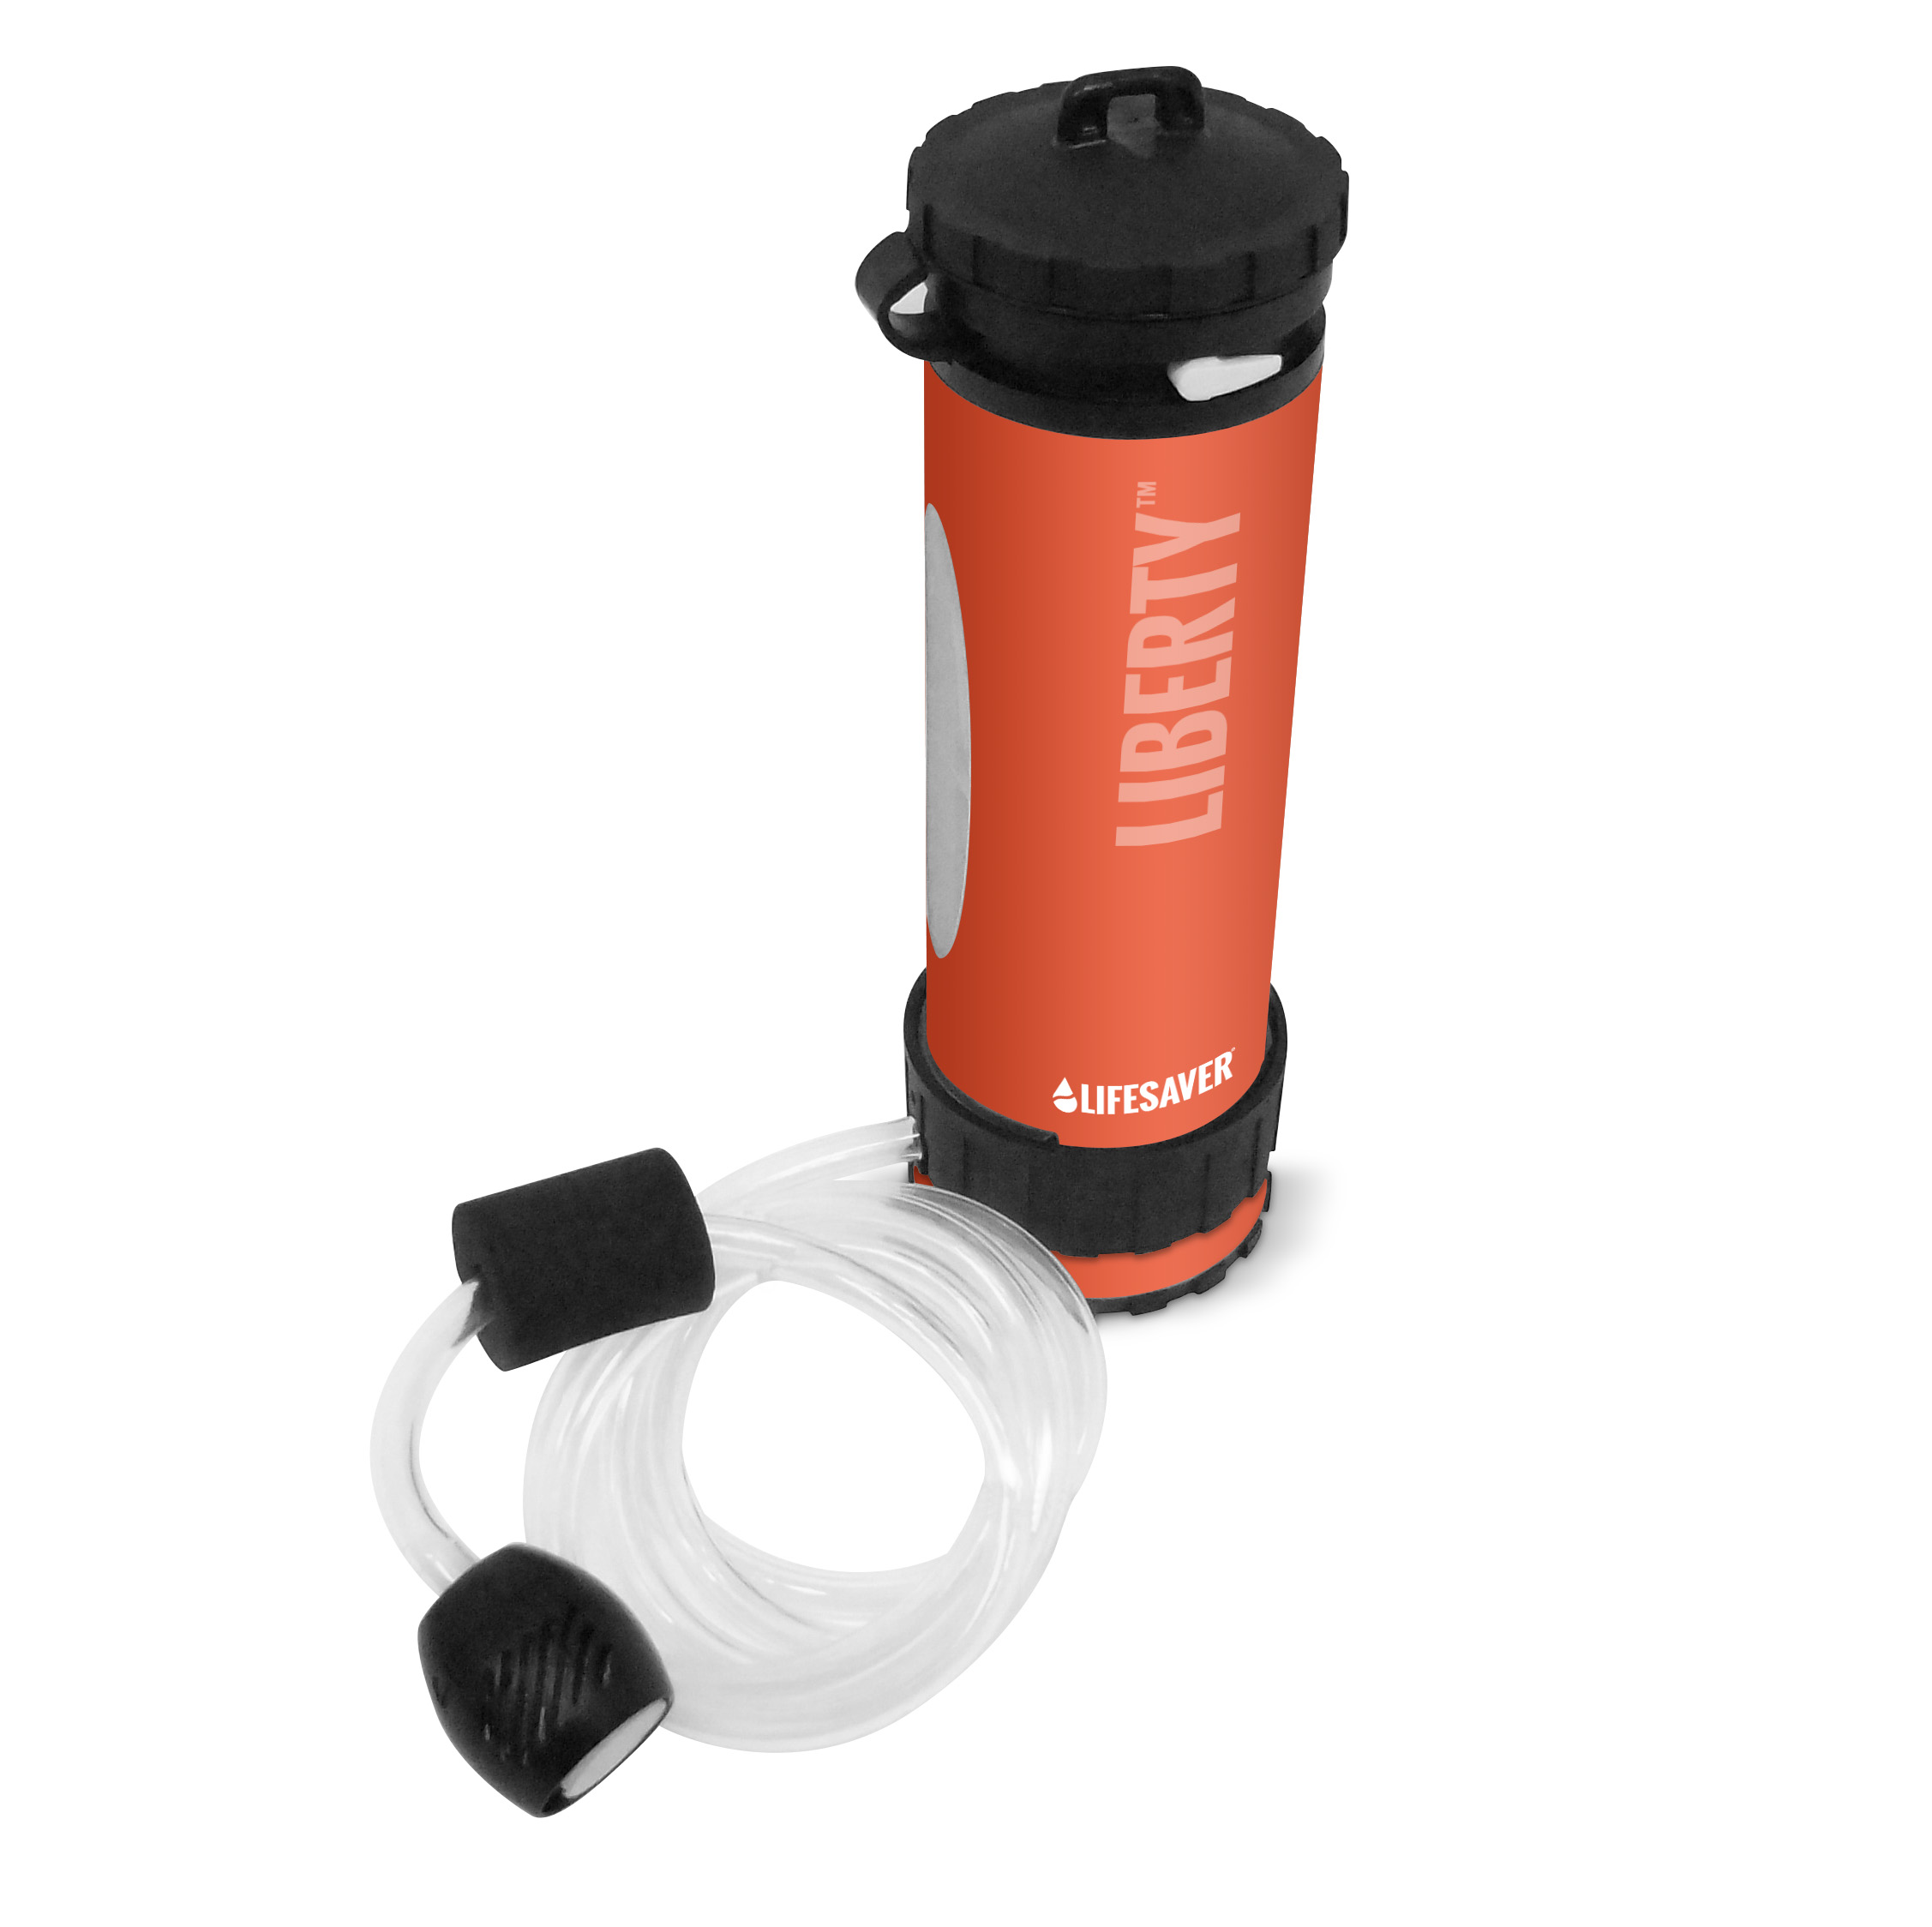 Test & Certificate Lifesaver Liberty Outdoor Water Filter